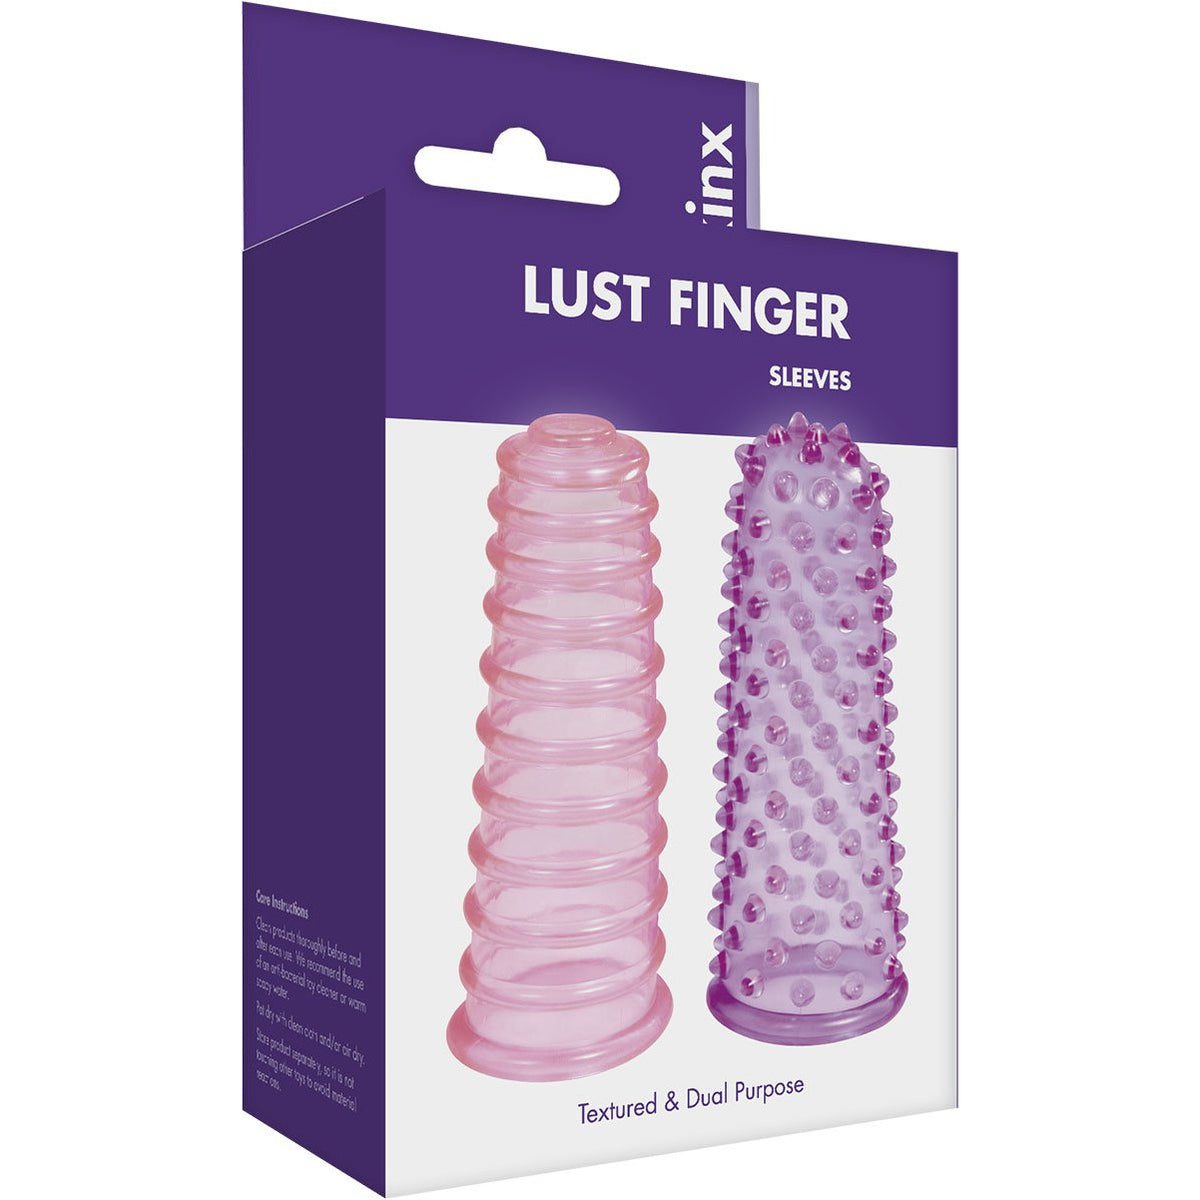 Kinx Lust Finger Sleeves - Pink and Purple